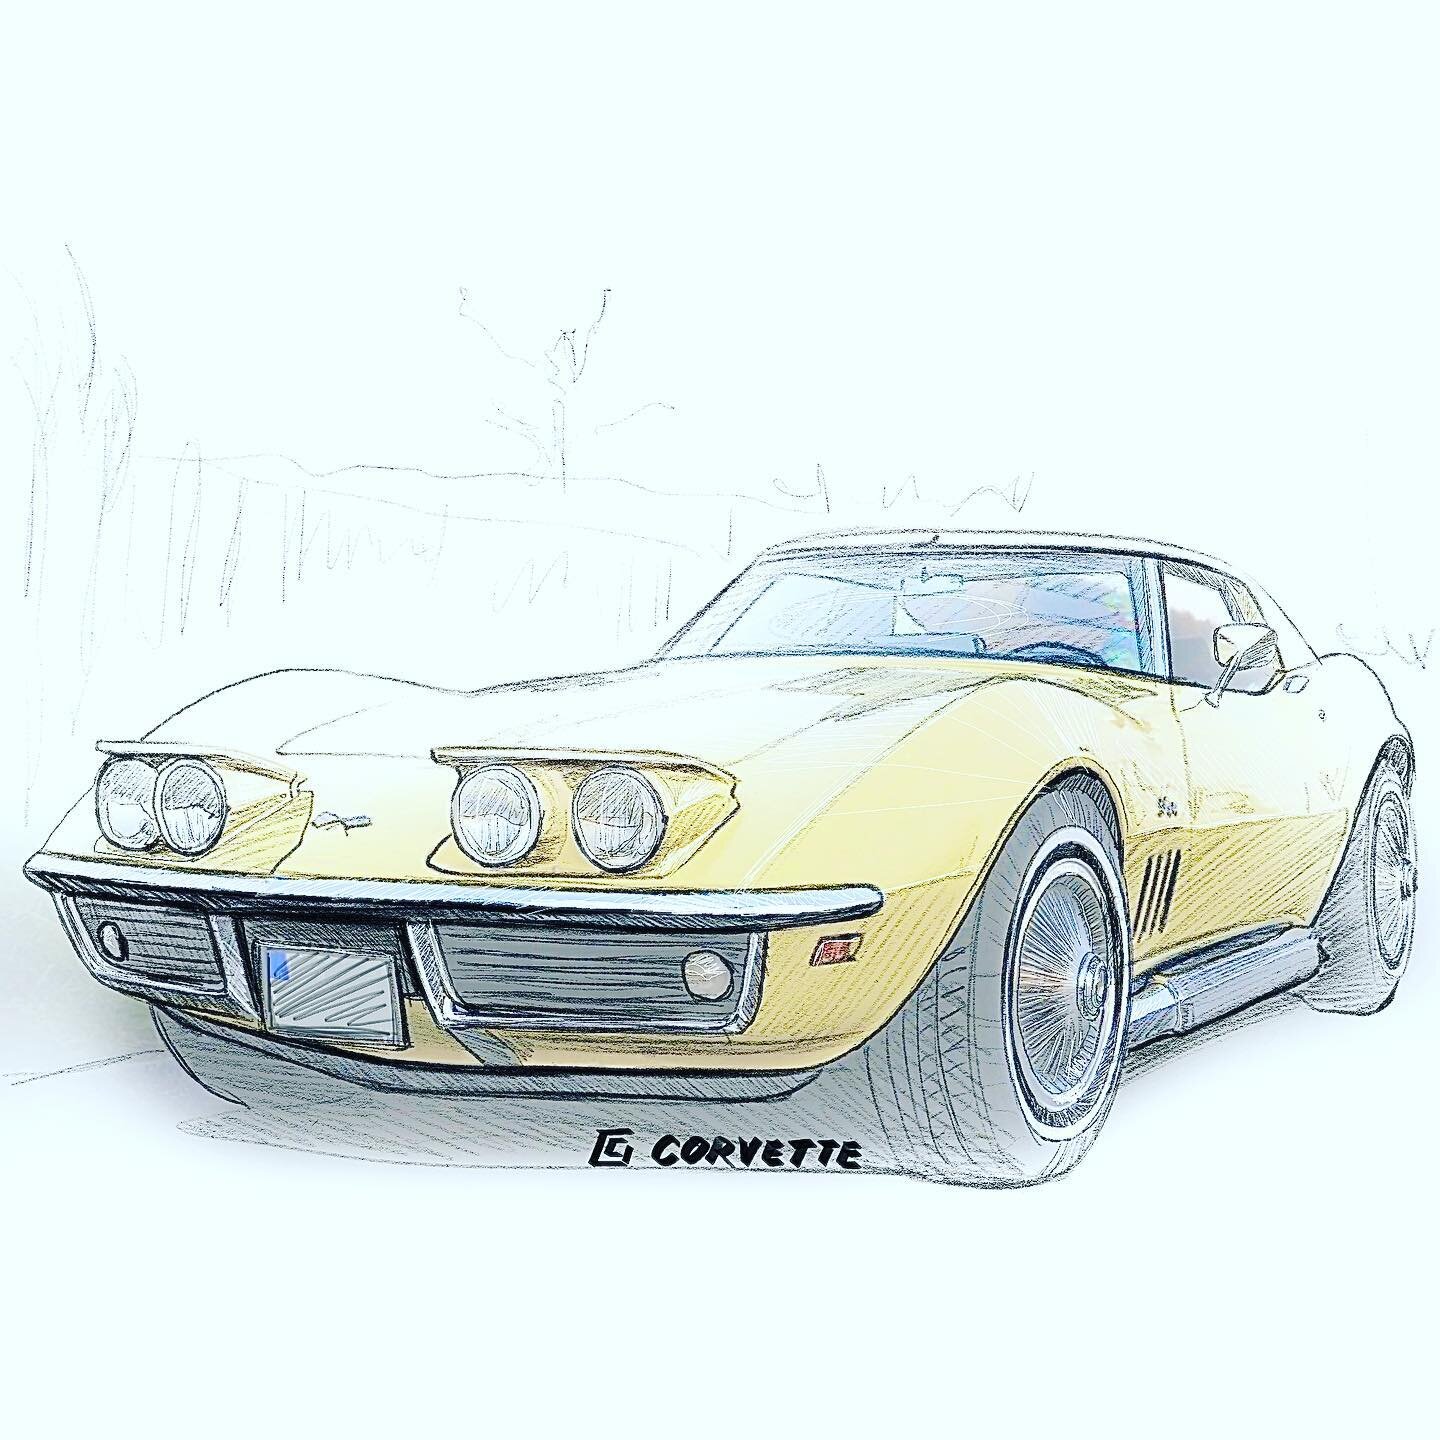 Corvette C3
.
.
.
.
.
#corvette #corvettec3 #corvettelifestyle #corvettelife #classiccorvettes #classiccorvette #classiccar #classiccarsketch #classiccarart #carlifestyle #cartisgraphy